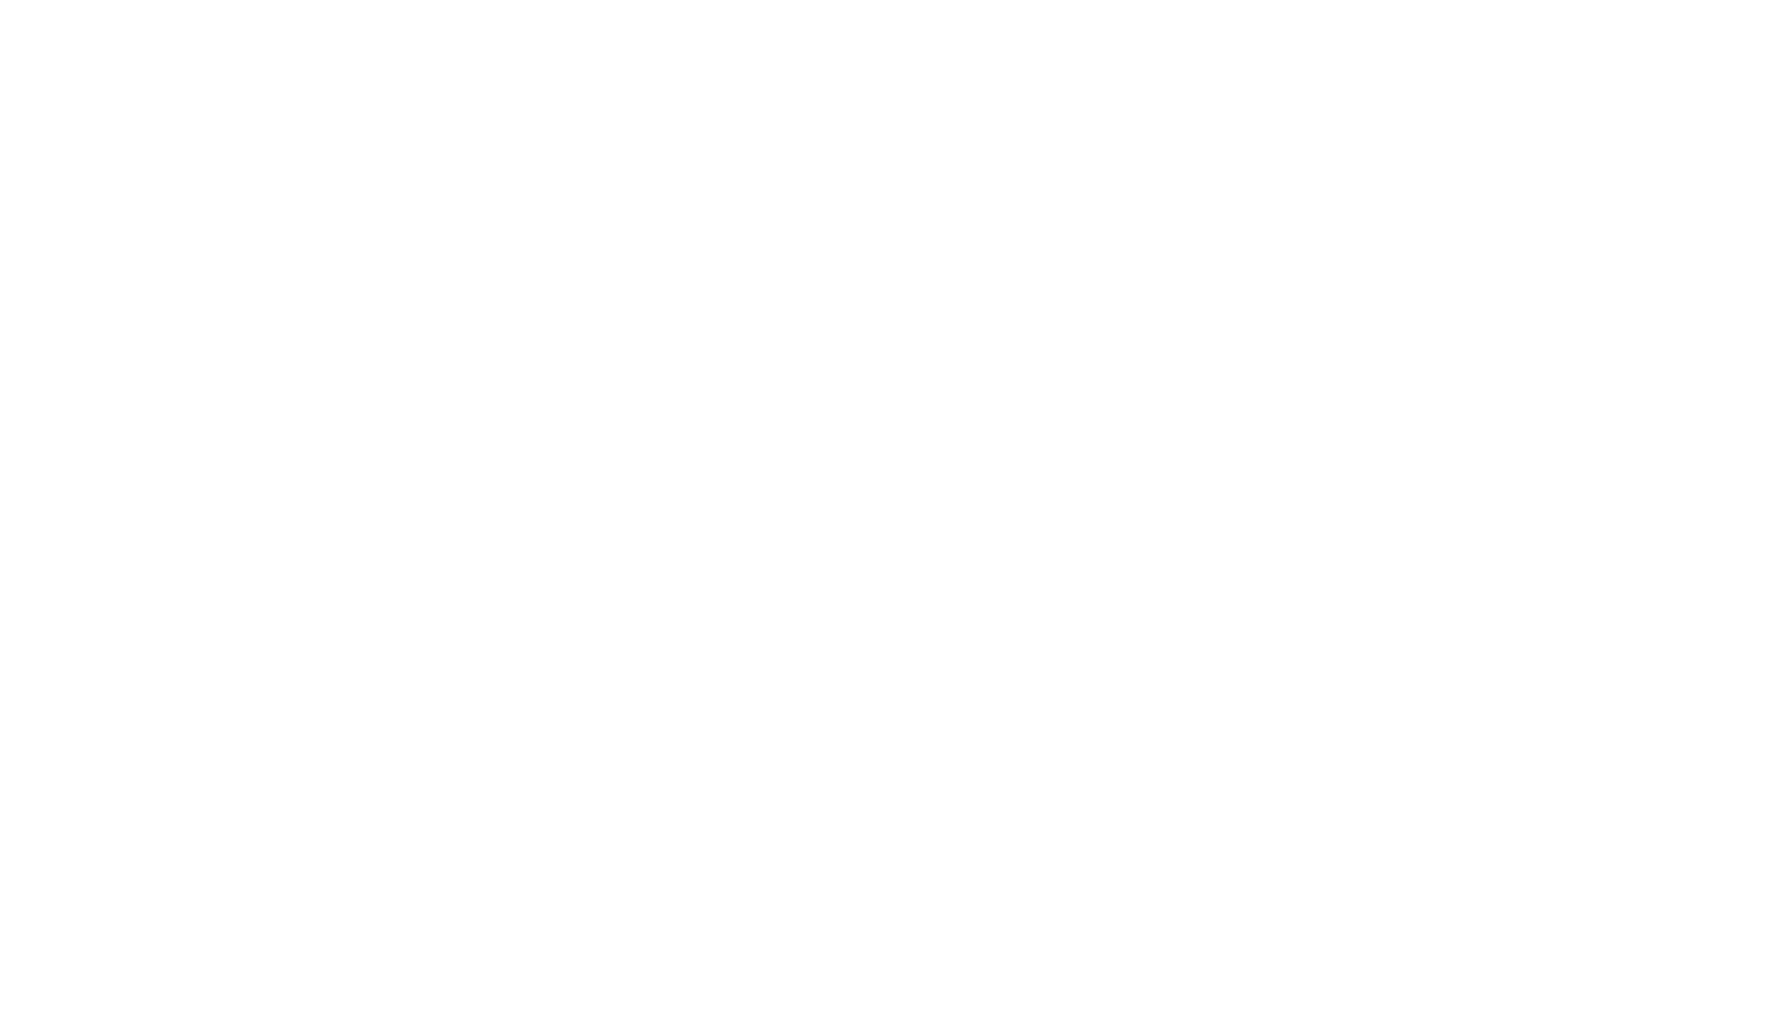 NortherBIDS_PrimaryLogo-02 edit